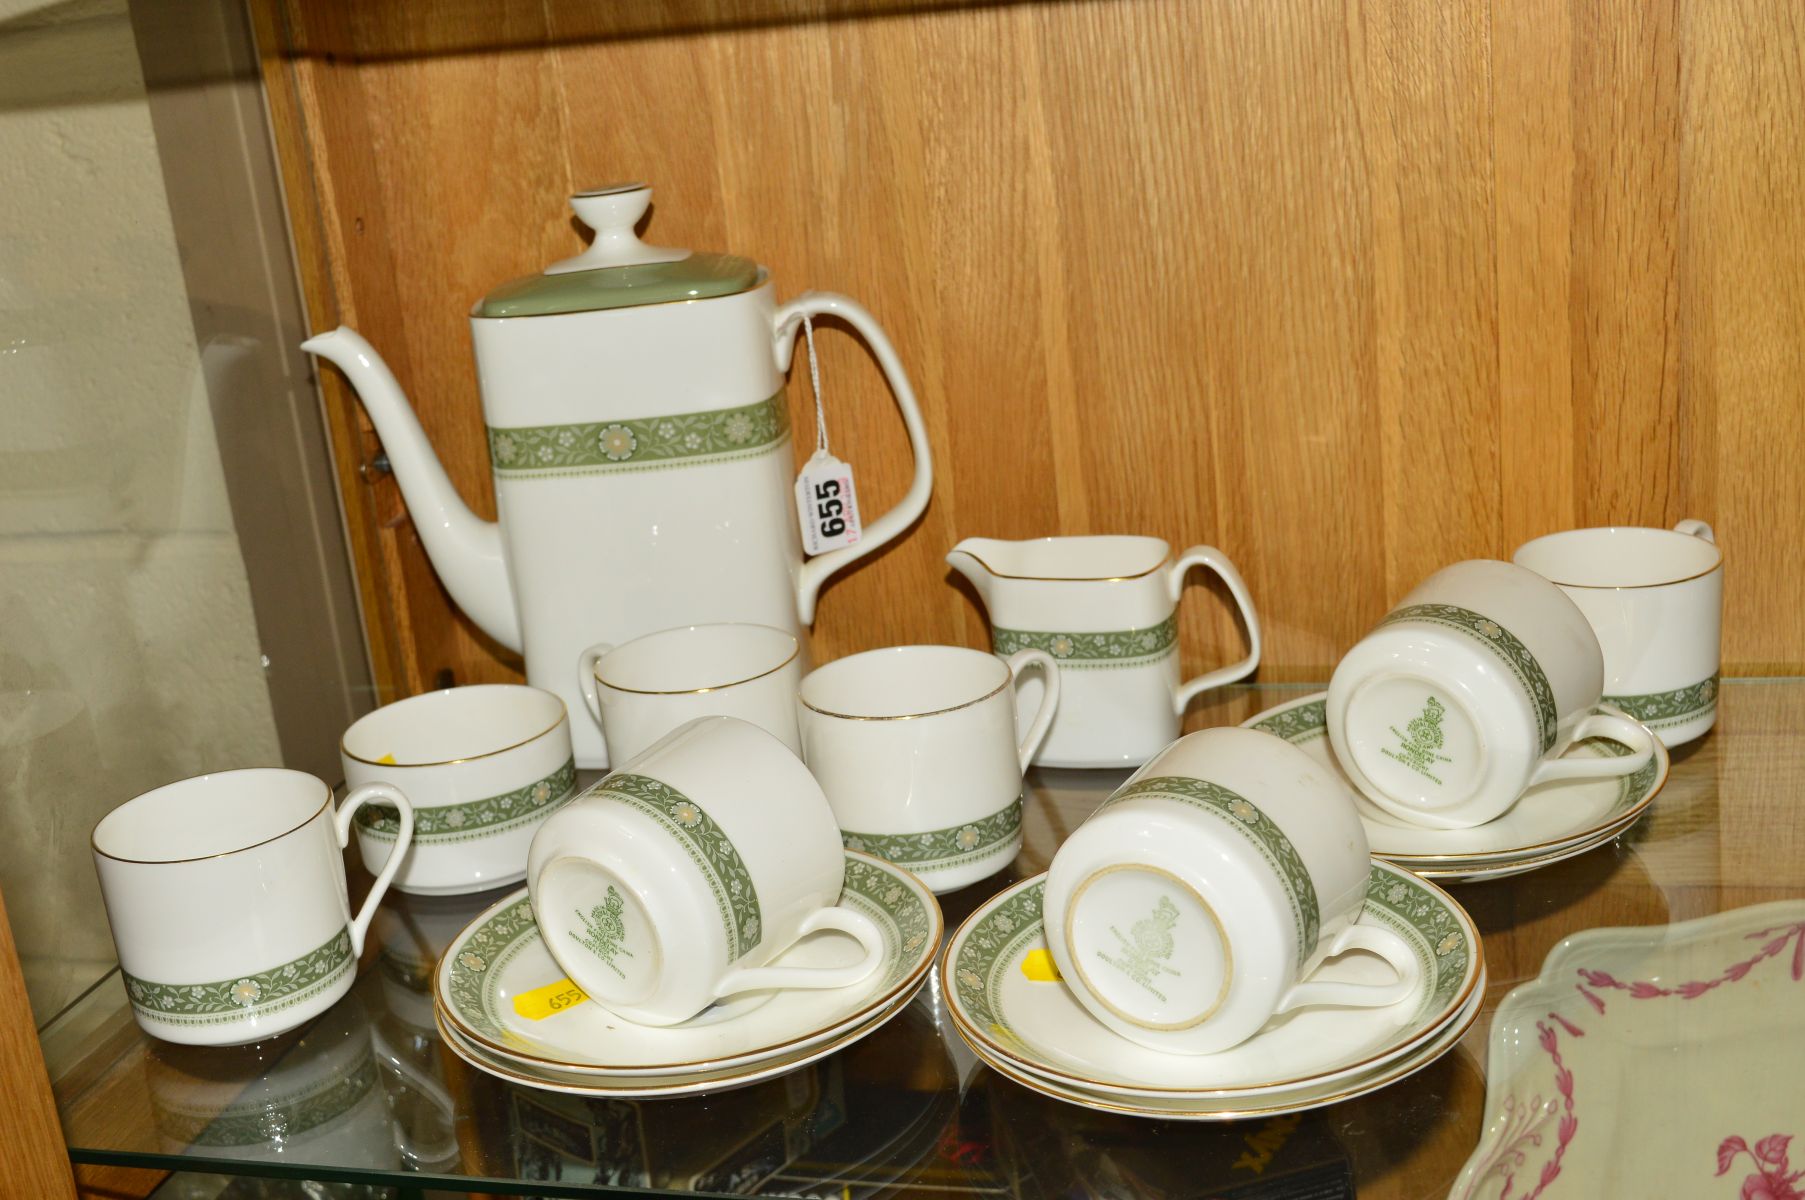 ROYAL DOULTON 'RONDELAY' COFFEE SET, H5004, comprising coffee pot, cream jug, sugar bowl, six cups